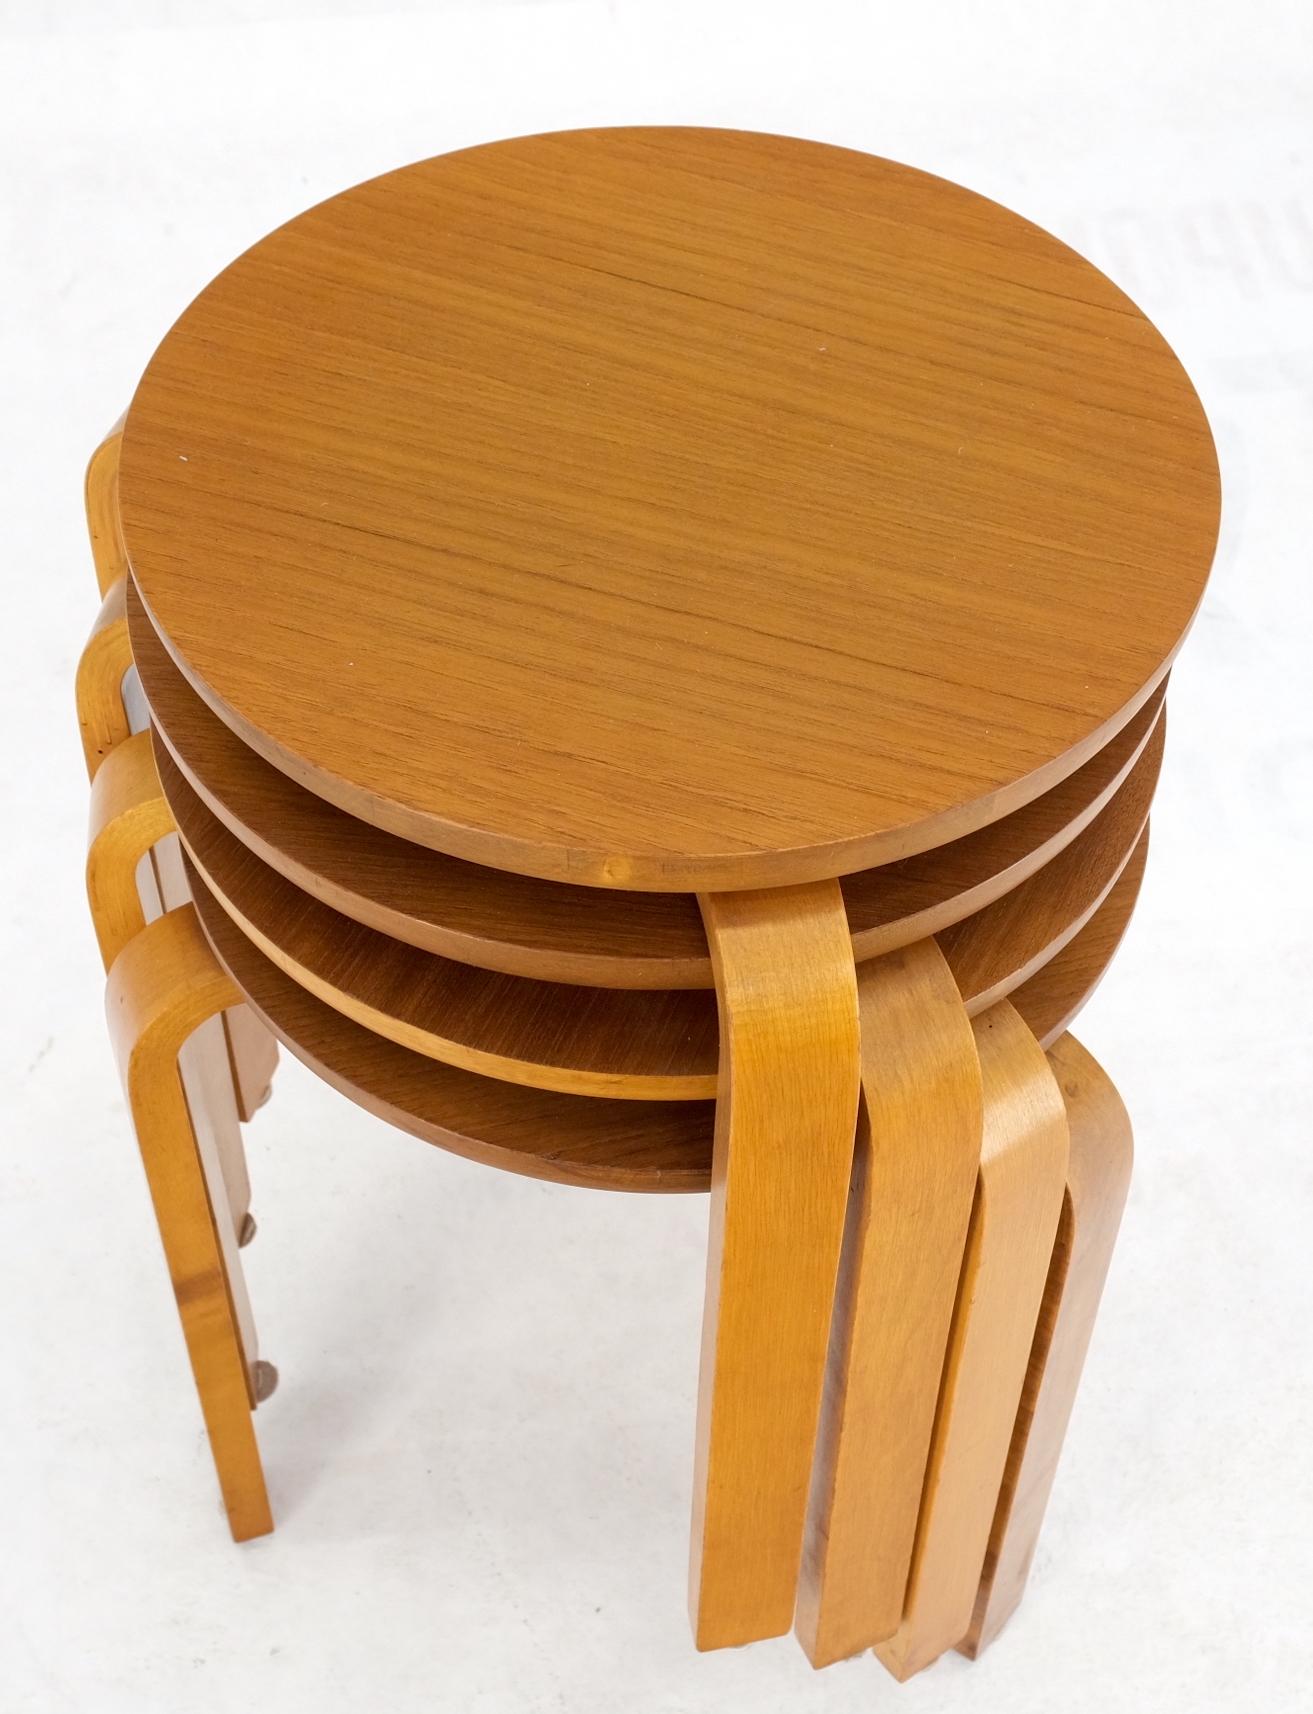 Set of 4 Alvar Aalto Round Birch Bent Leg Nesting Tables c.1950s Made in Sweden For Sale 10